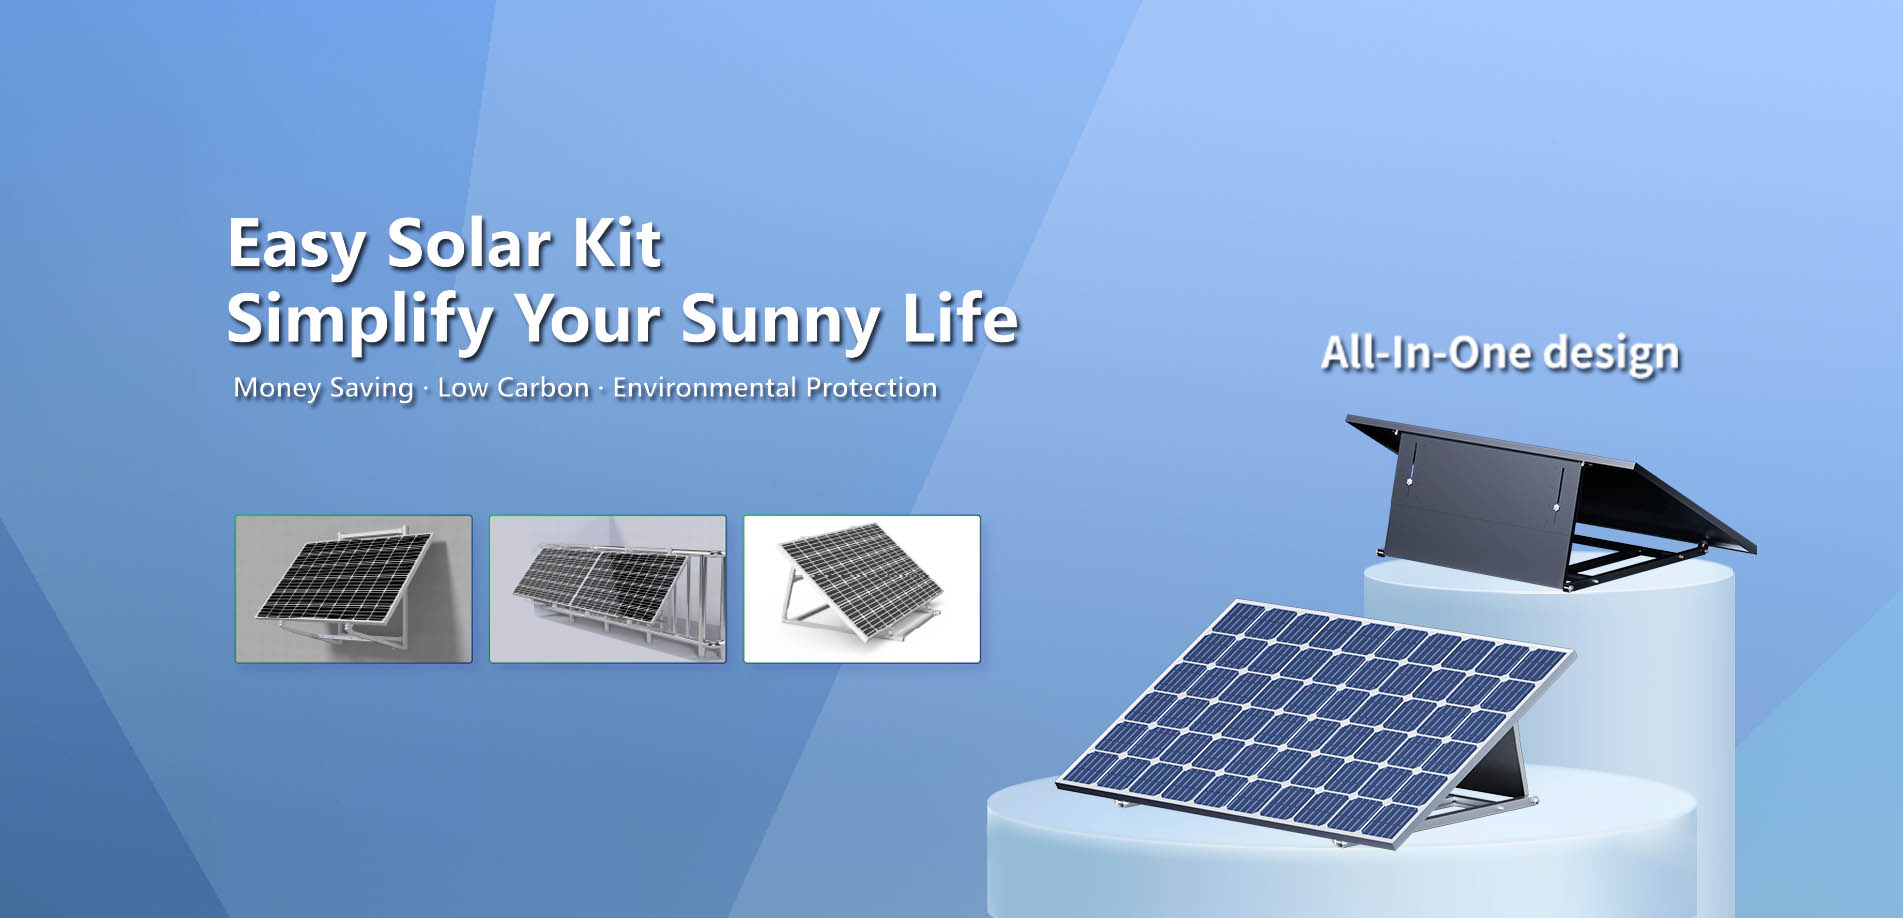 Easy solar kit system